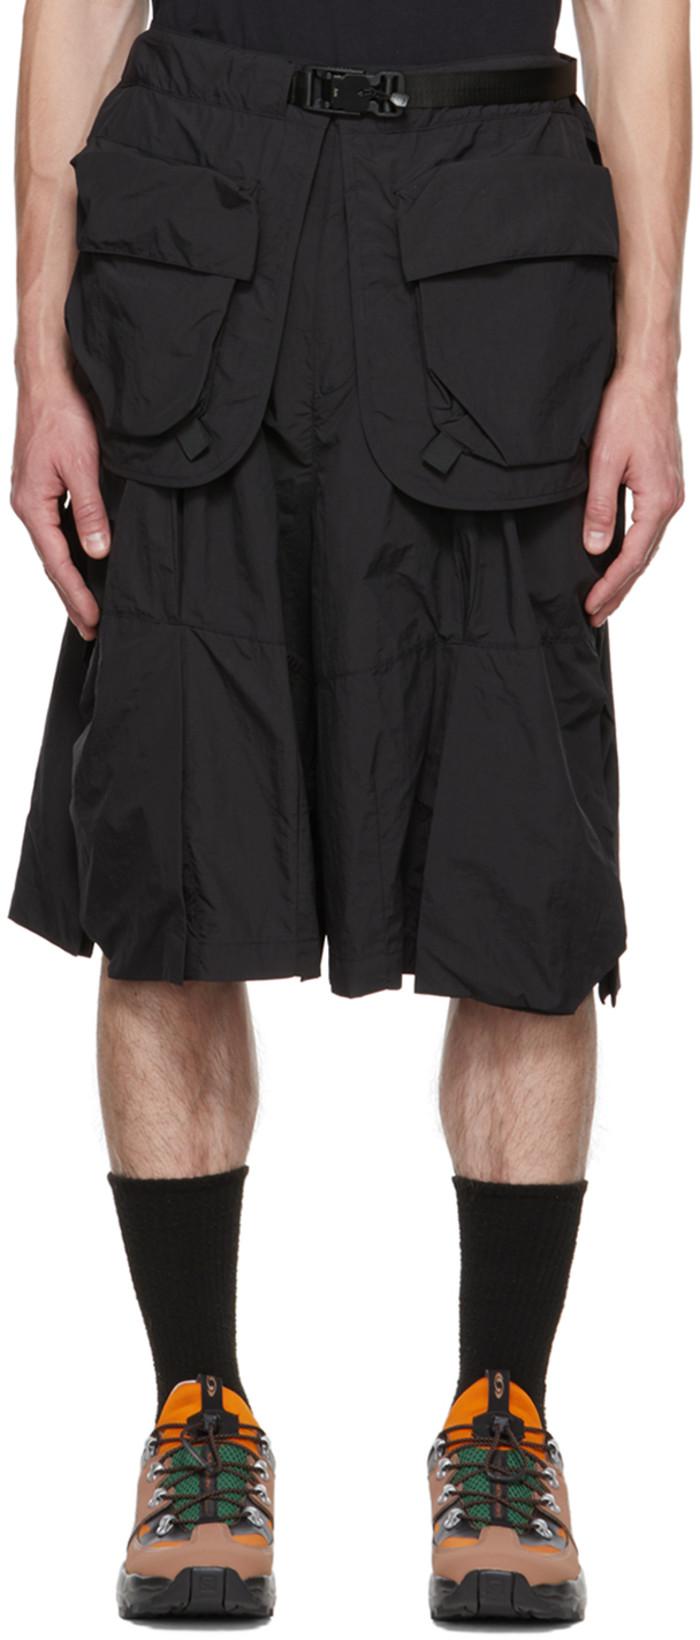 Black Belt Bag Shorts by ARCHIVAL REINVENT